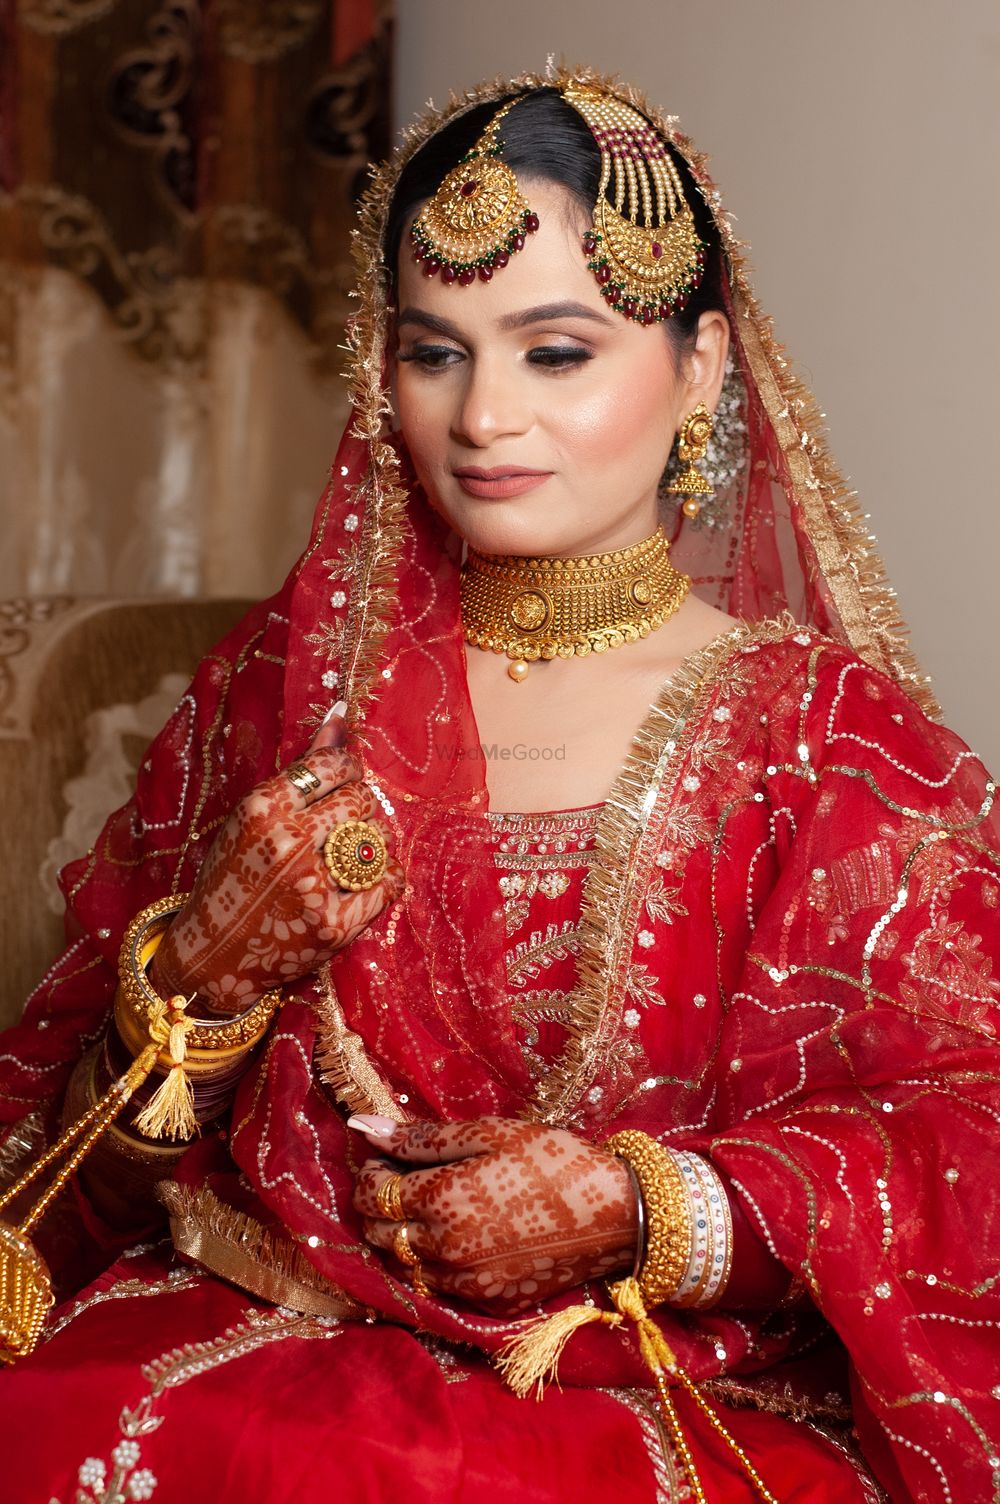 Photo By Manmeet Matharu Makeup Artist - Bridal Makeup